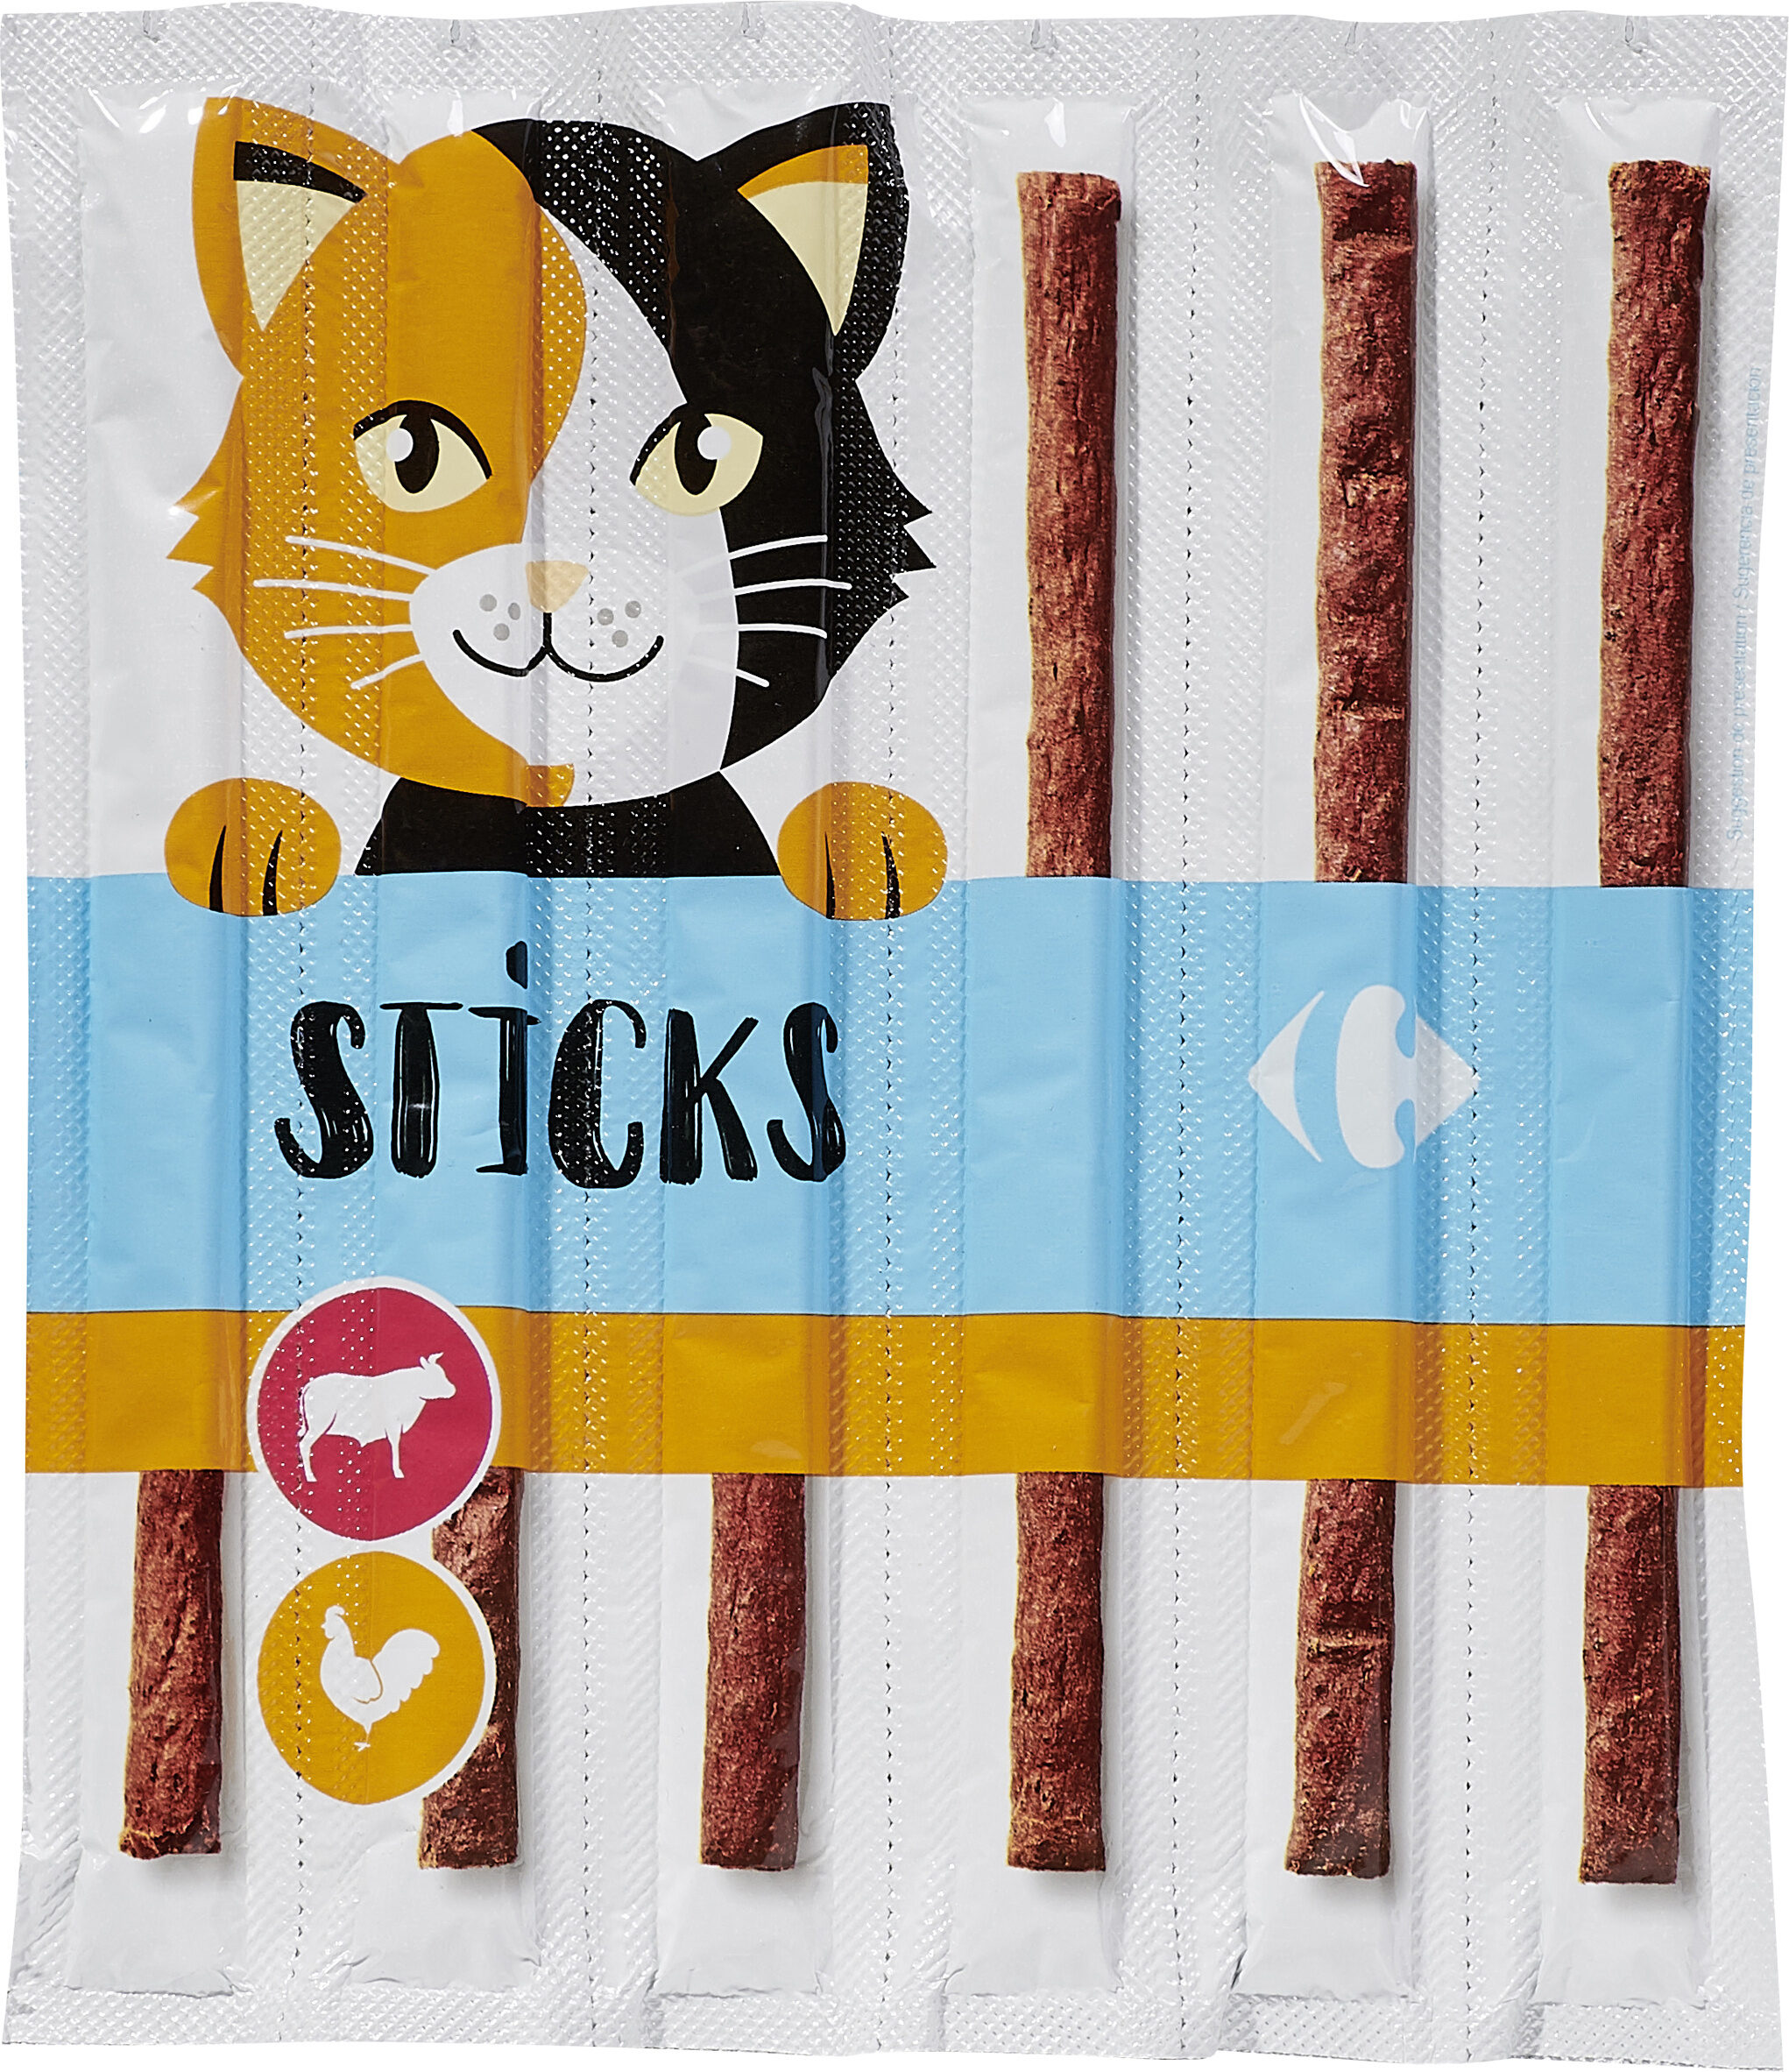 Sticks - Produit - fr